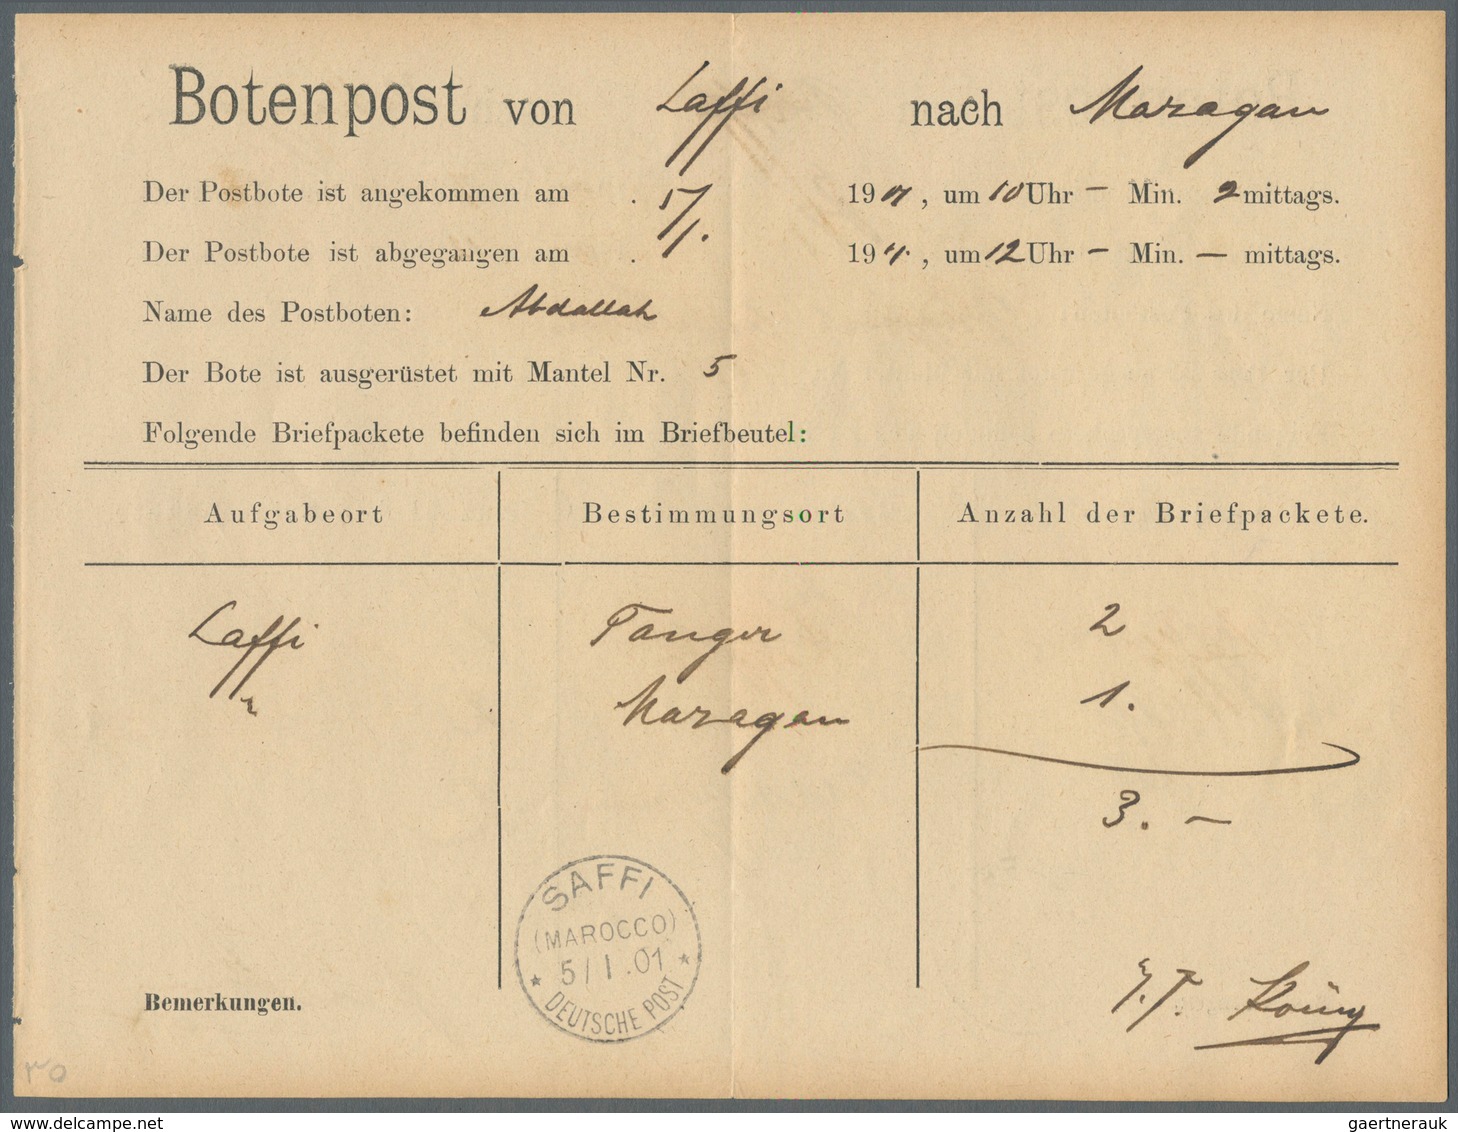 18495 Deutsche Post In Marokko - Besonderheiten: 1901 (5.1.), Stempel "SAFFI (MAROKKO) DEUTSCHE POST" Auf - Deutsche Post In Marokko